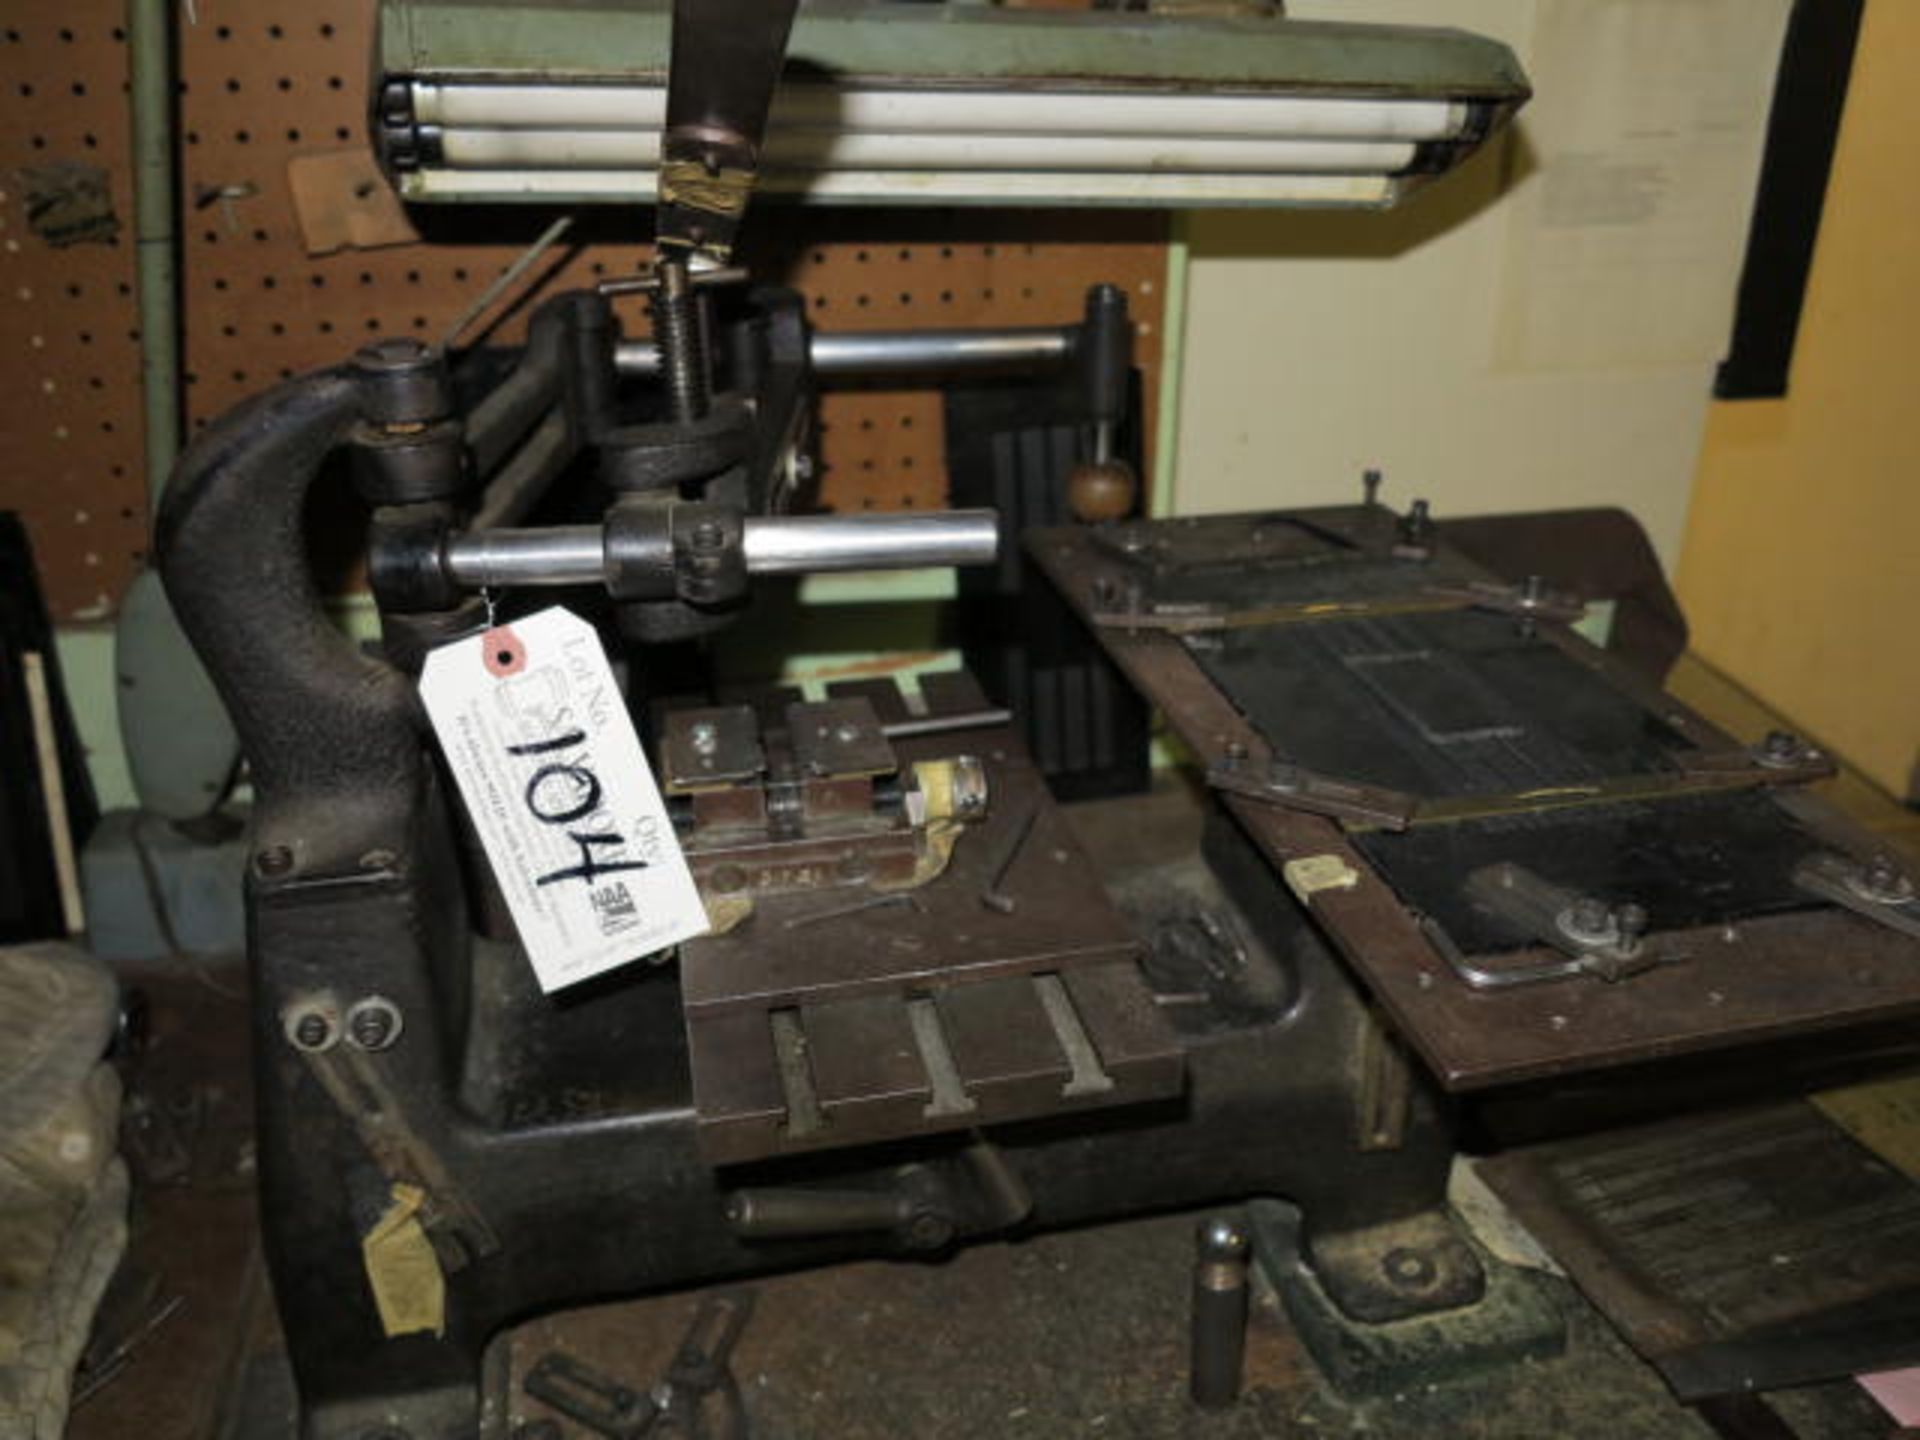 Manual Pantograph Engraver Location: 129 Bank St